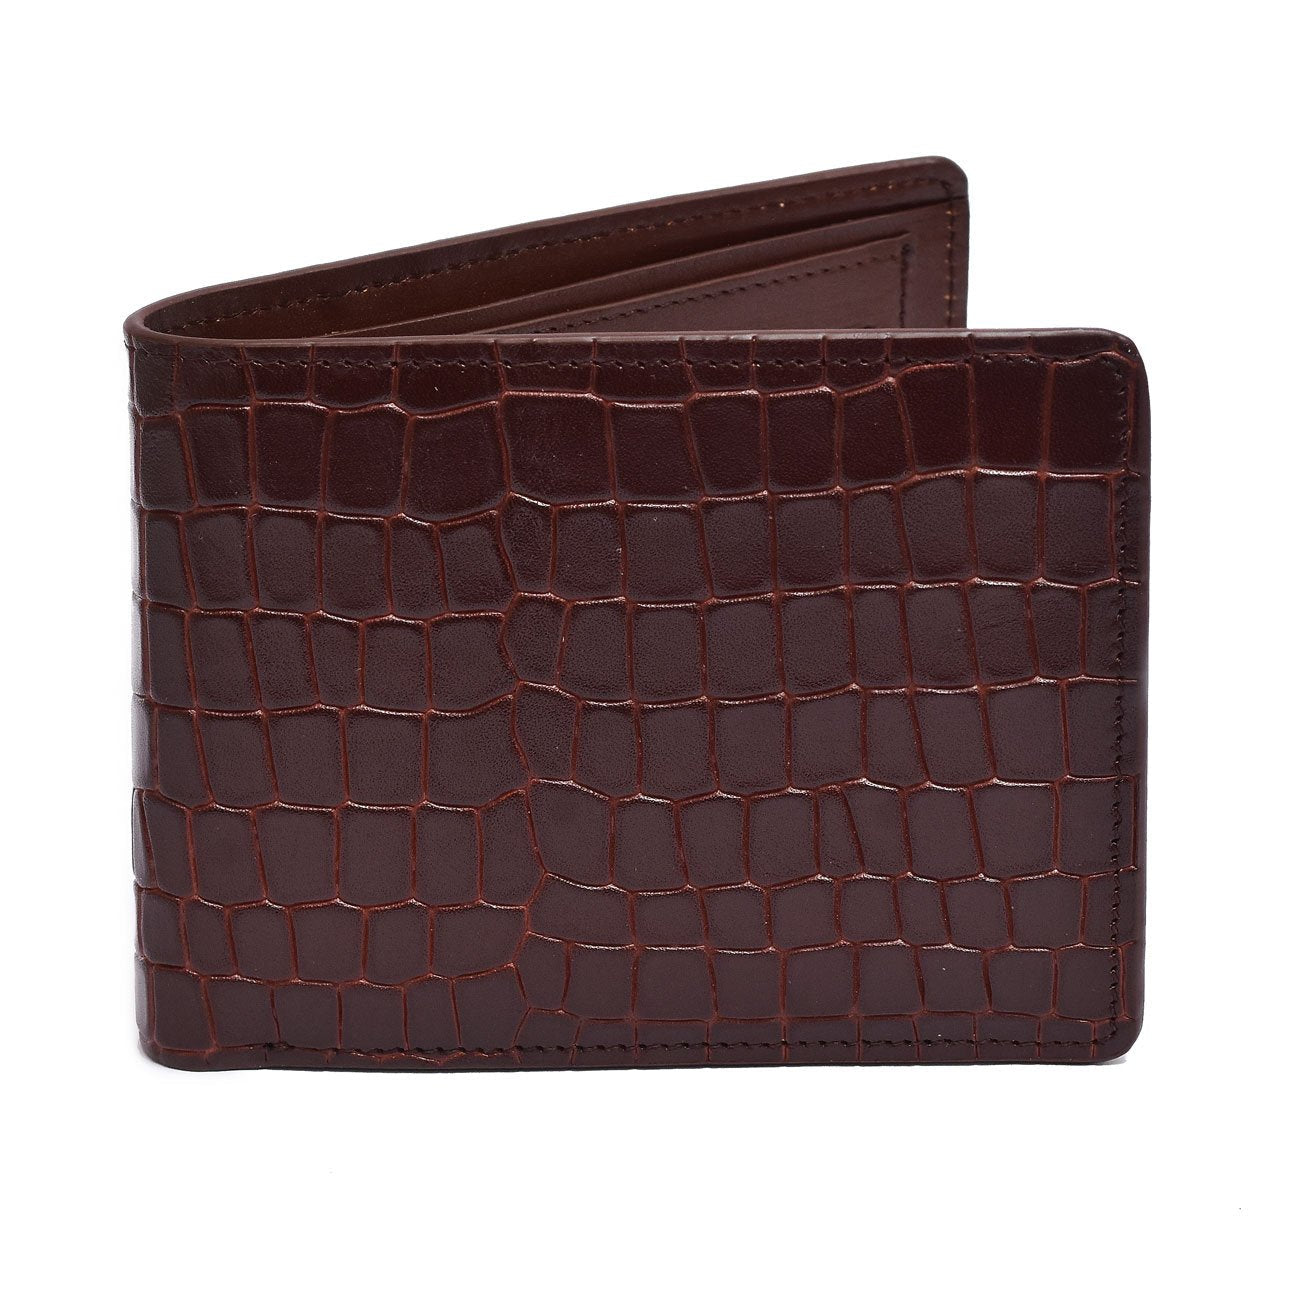 Zays Crocodile Embossed leather Wallet - (Chocolate) WL09